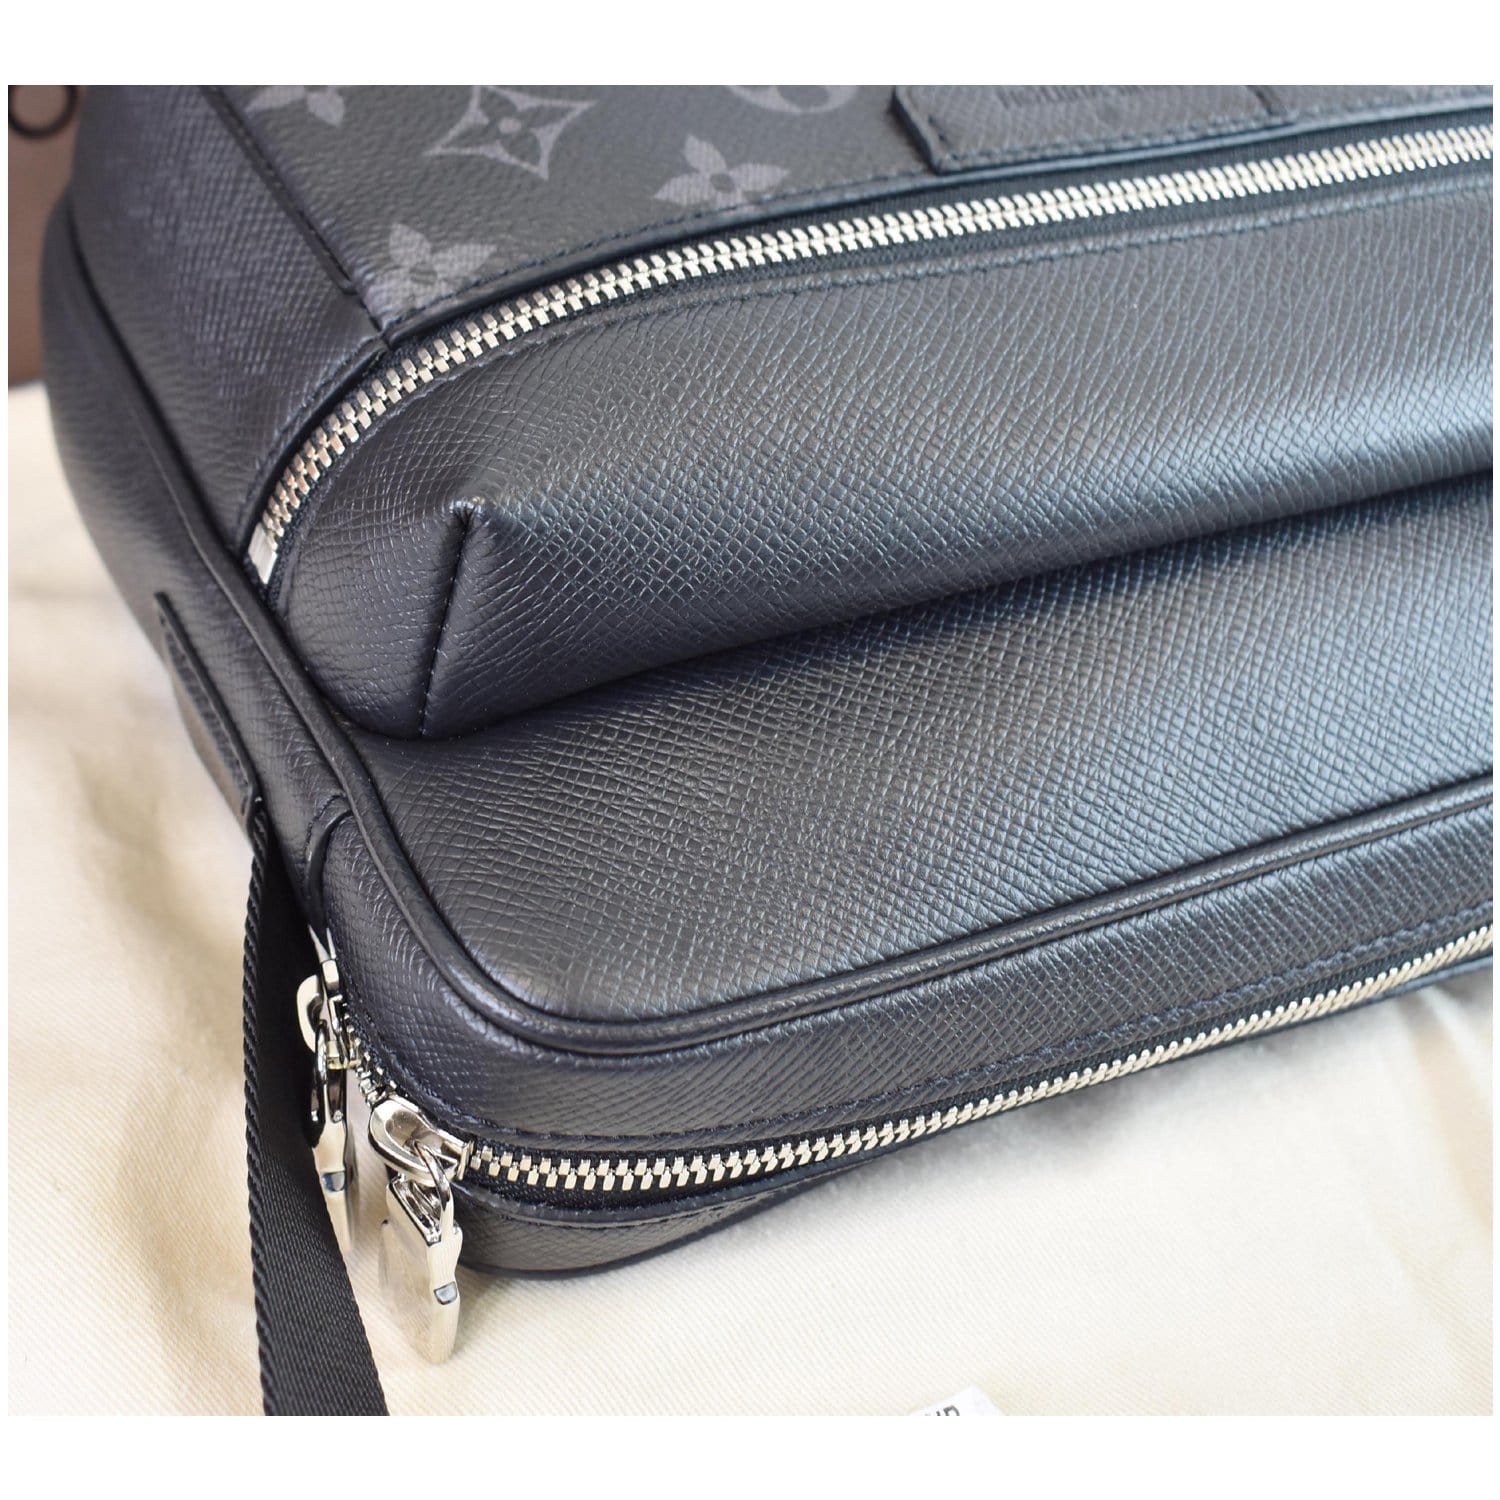 Louis Vuitton Outdoor Flap Messenger Bag Eclipse W/Certificate Of